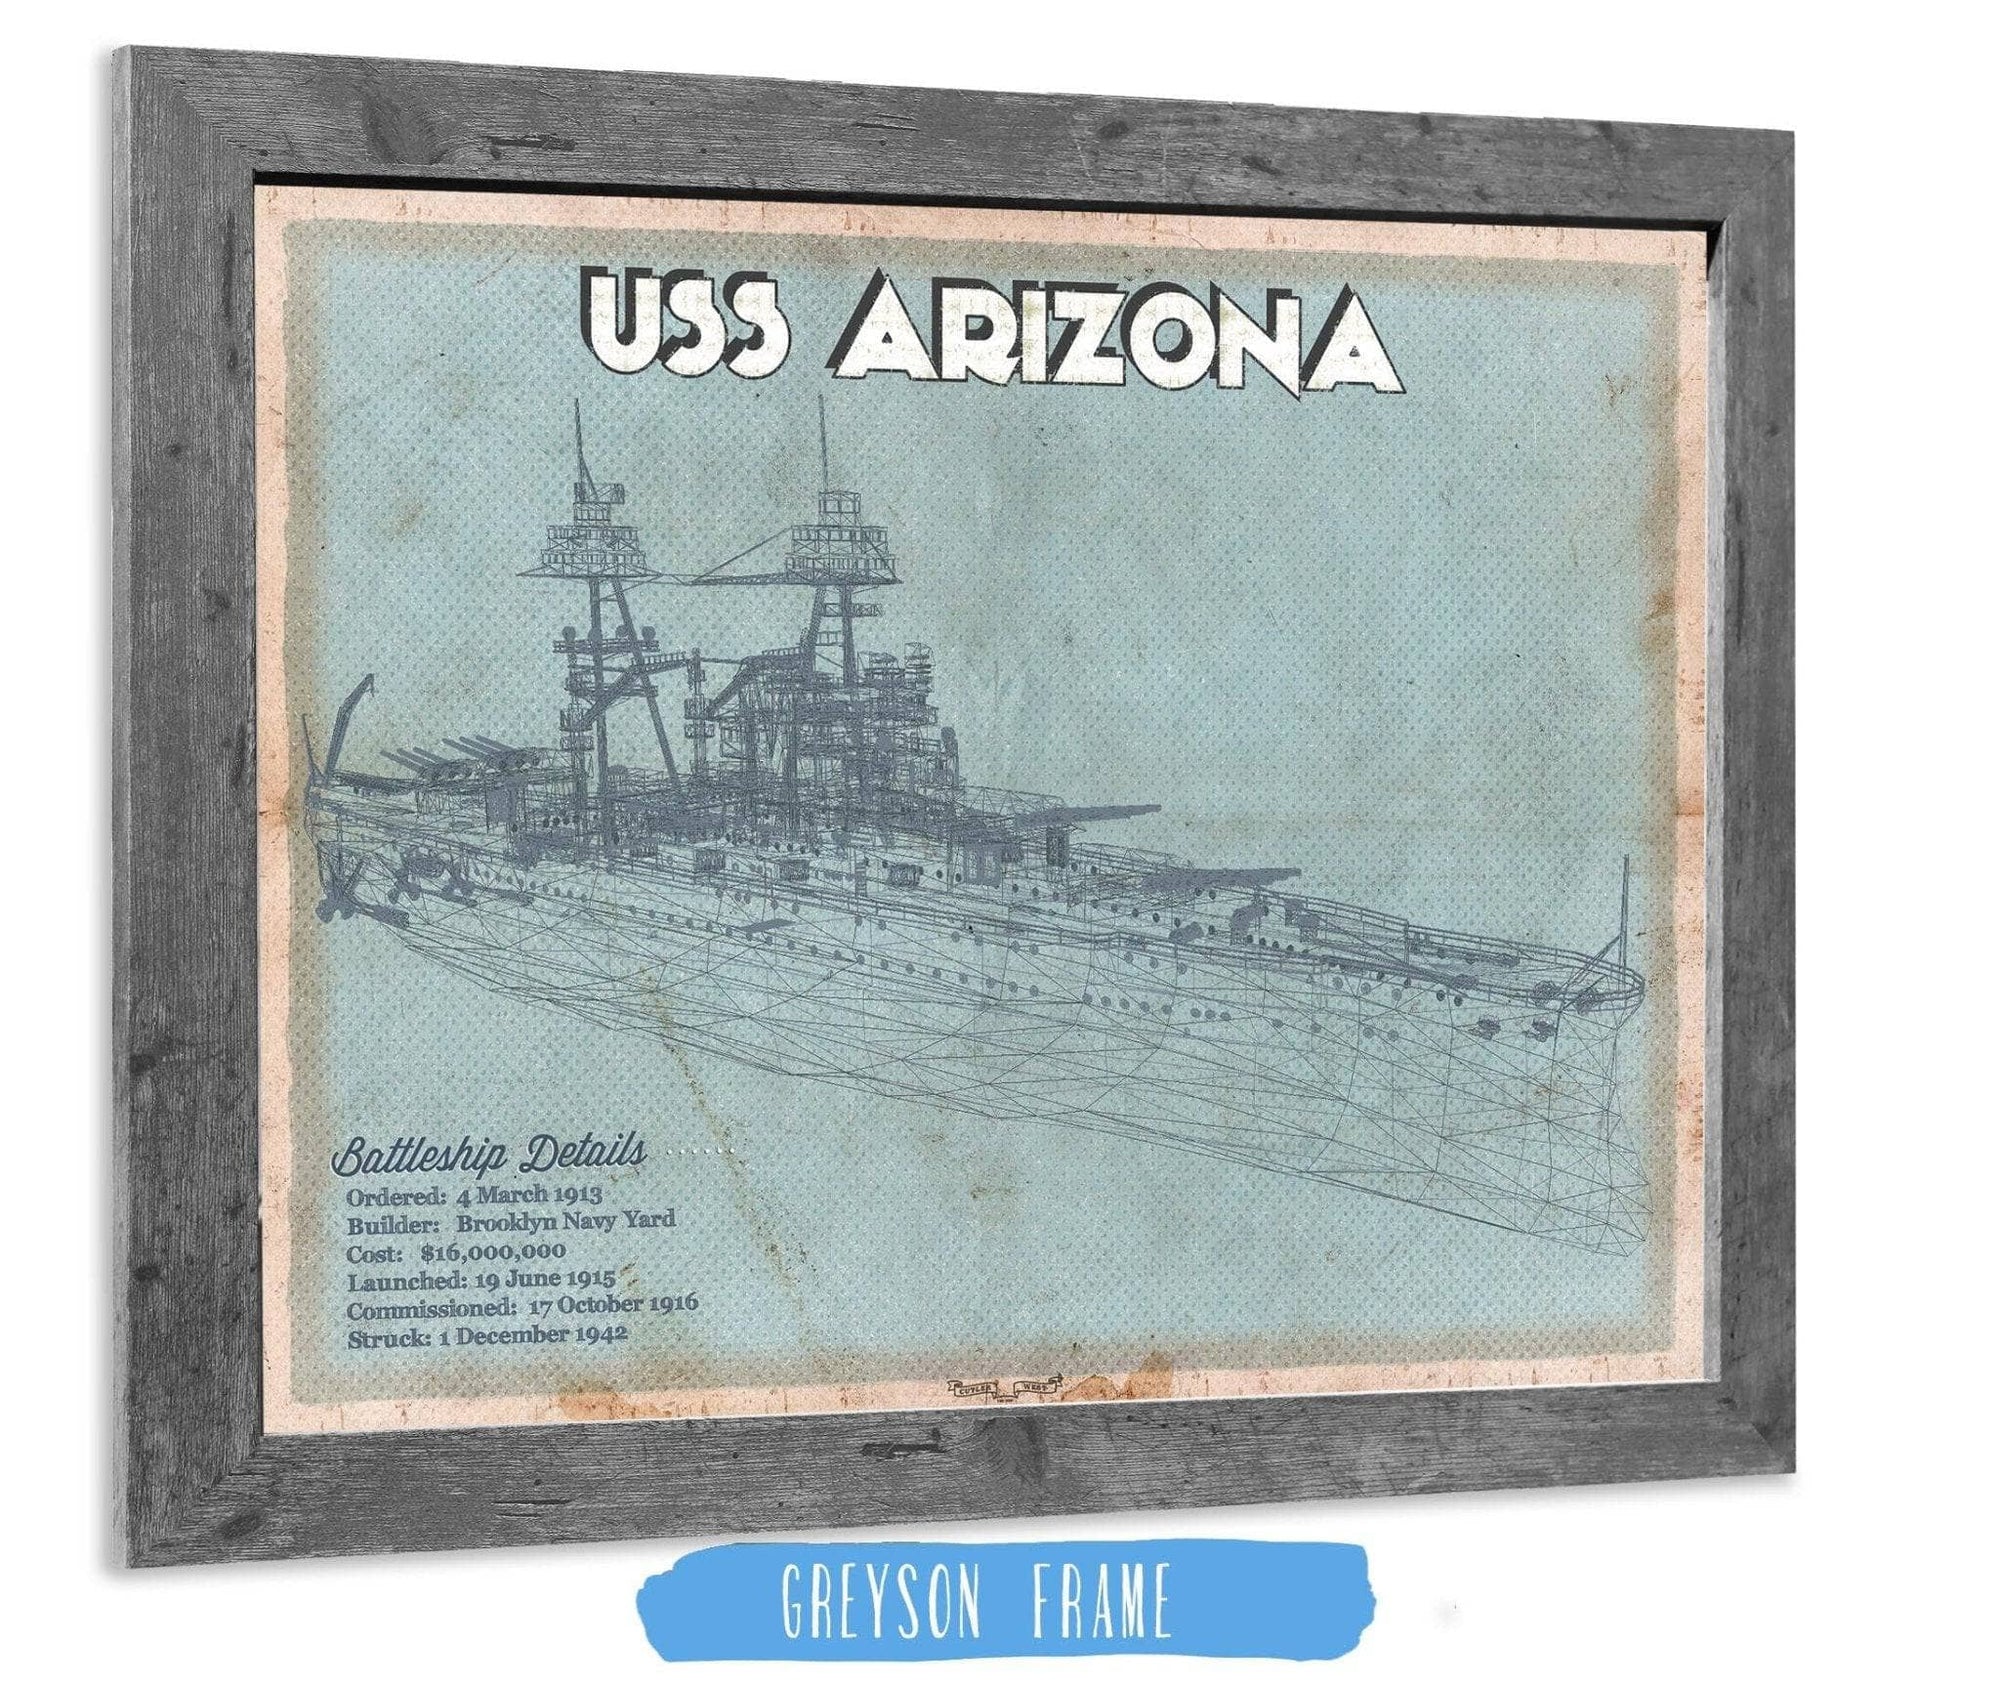 Cutler West Naval Military 14" x 11" / Greyson Frame USS Arizona WWII Battleship Blueprint Military Print 765892342_31717